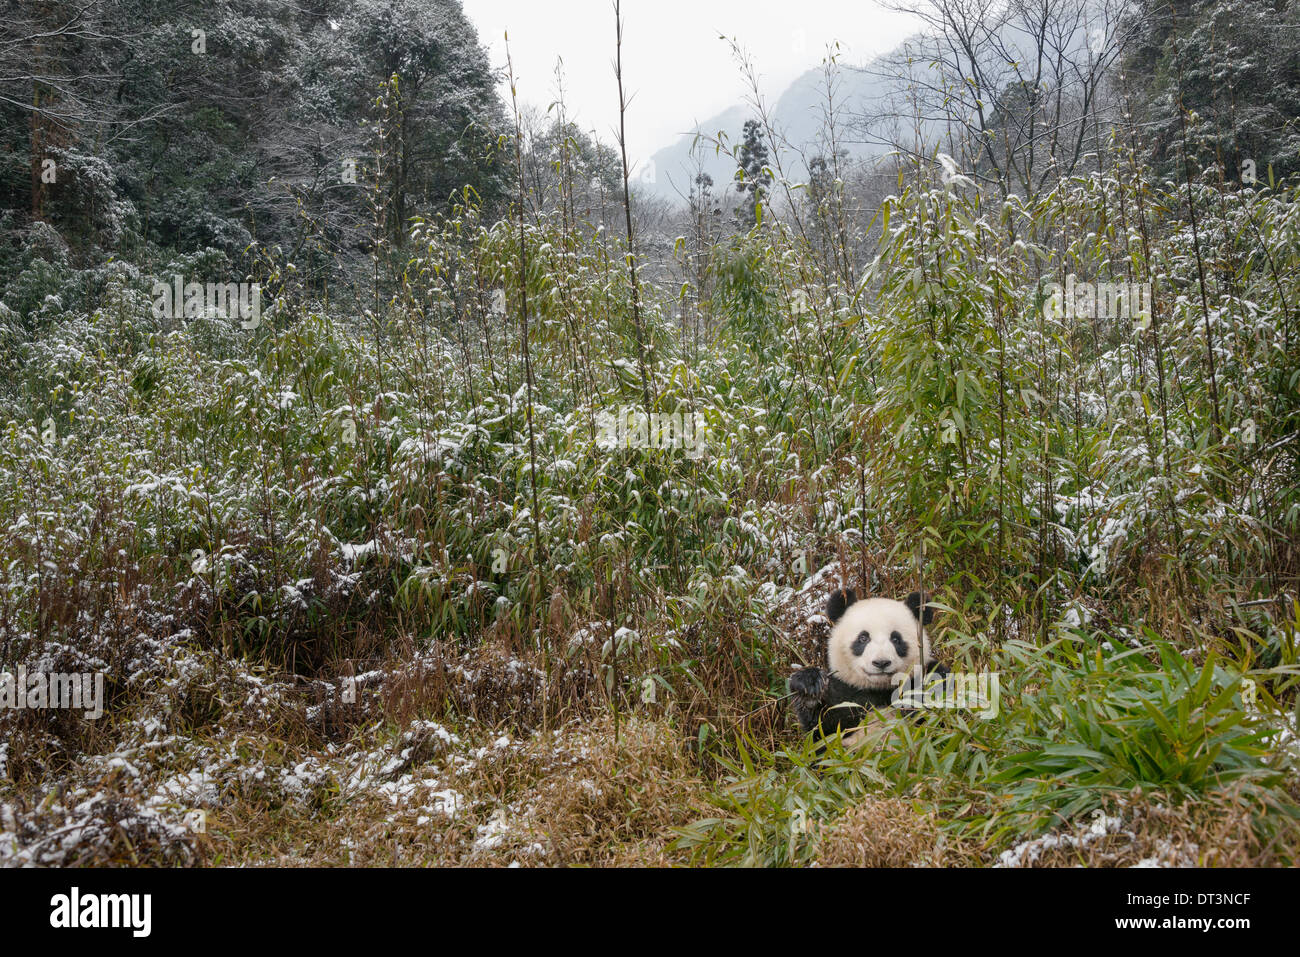 Young Giant Panda in native surroundings in China Stock Photo